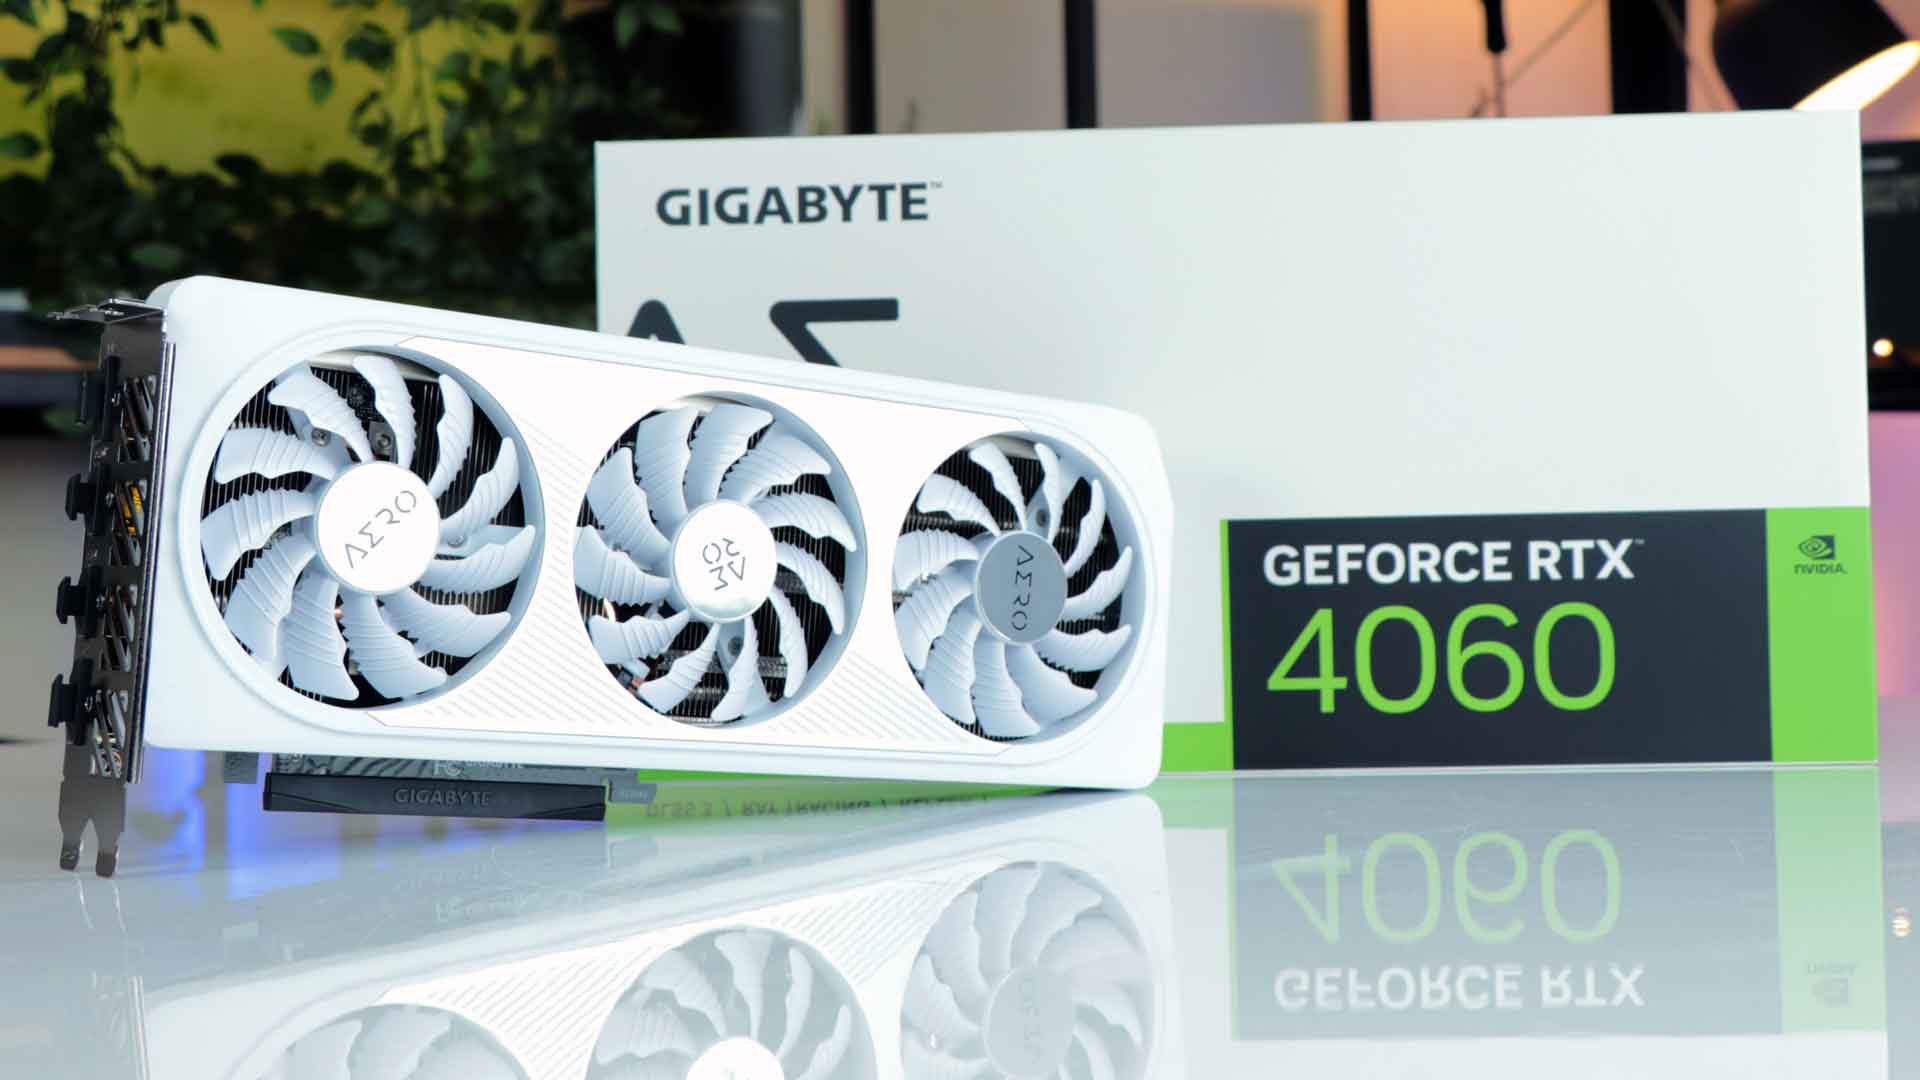 Test GeForce RTX 4070 Ti Gaming OC 12G de Gigabyte - GinjFo